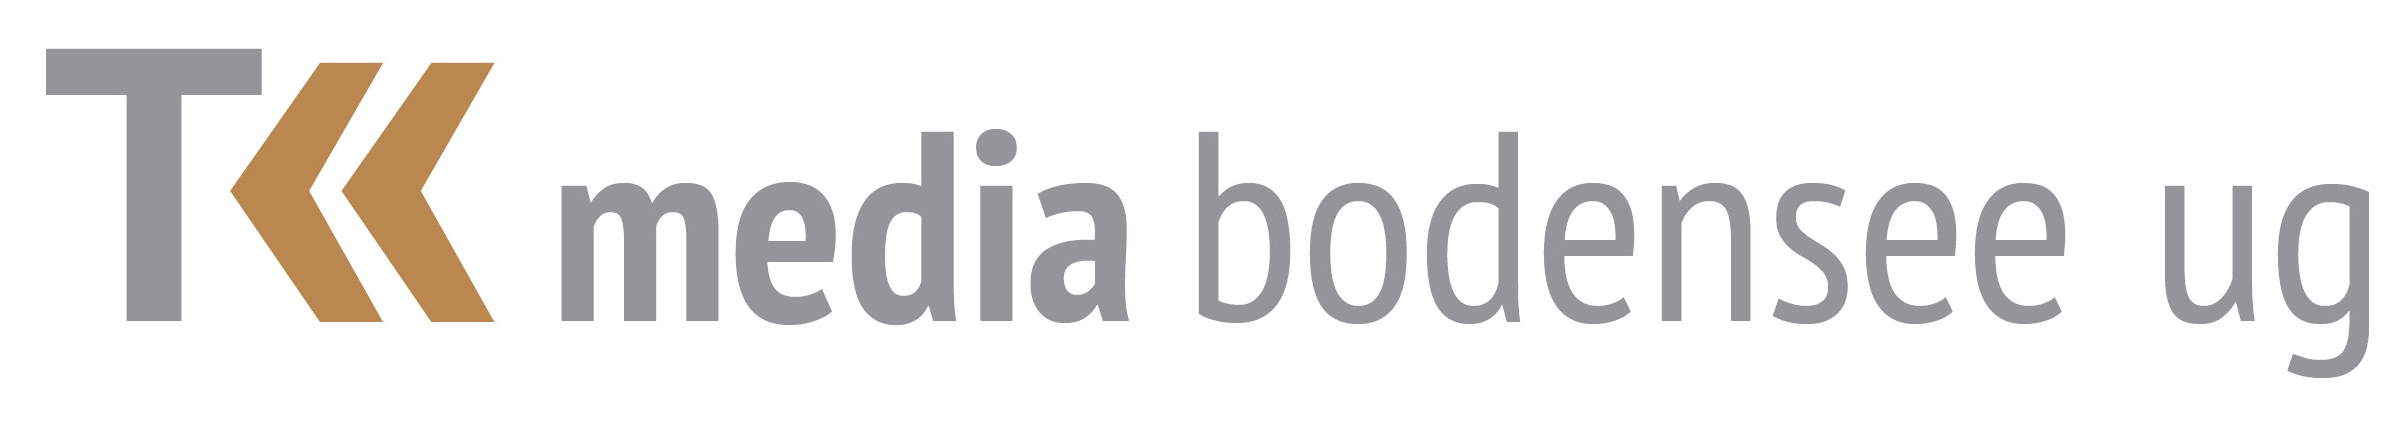 tk media bodensee Logo